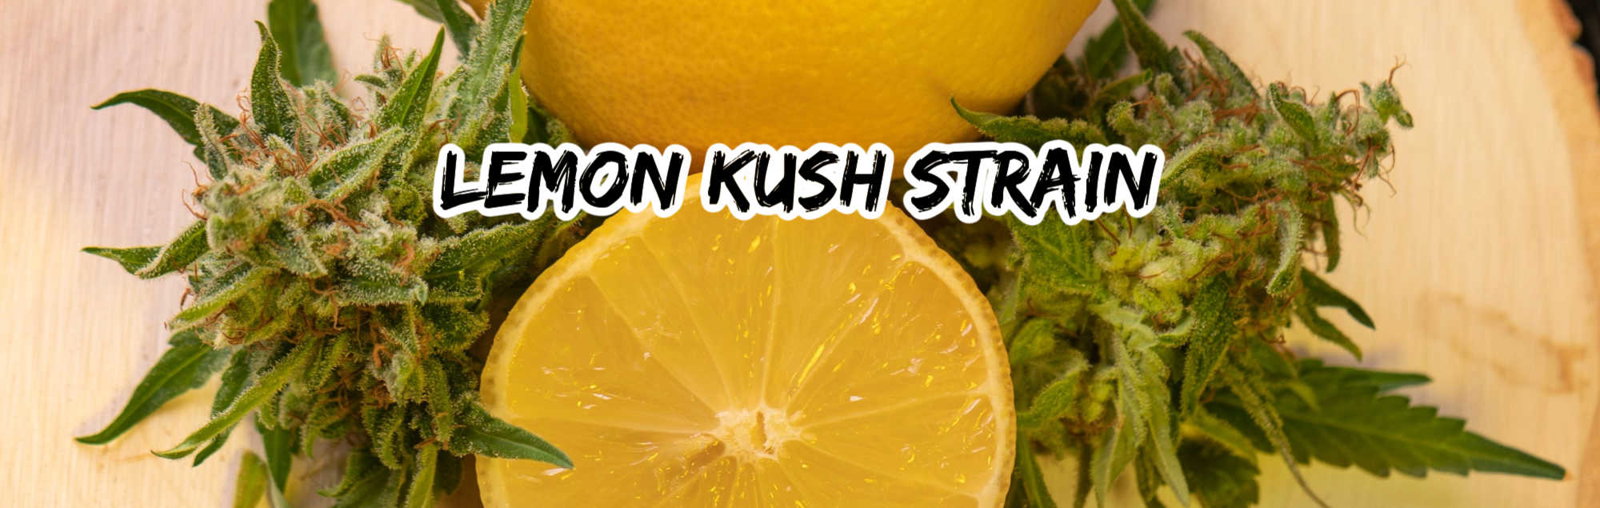 image of lemon kush strain